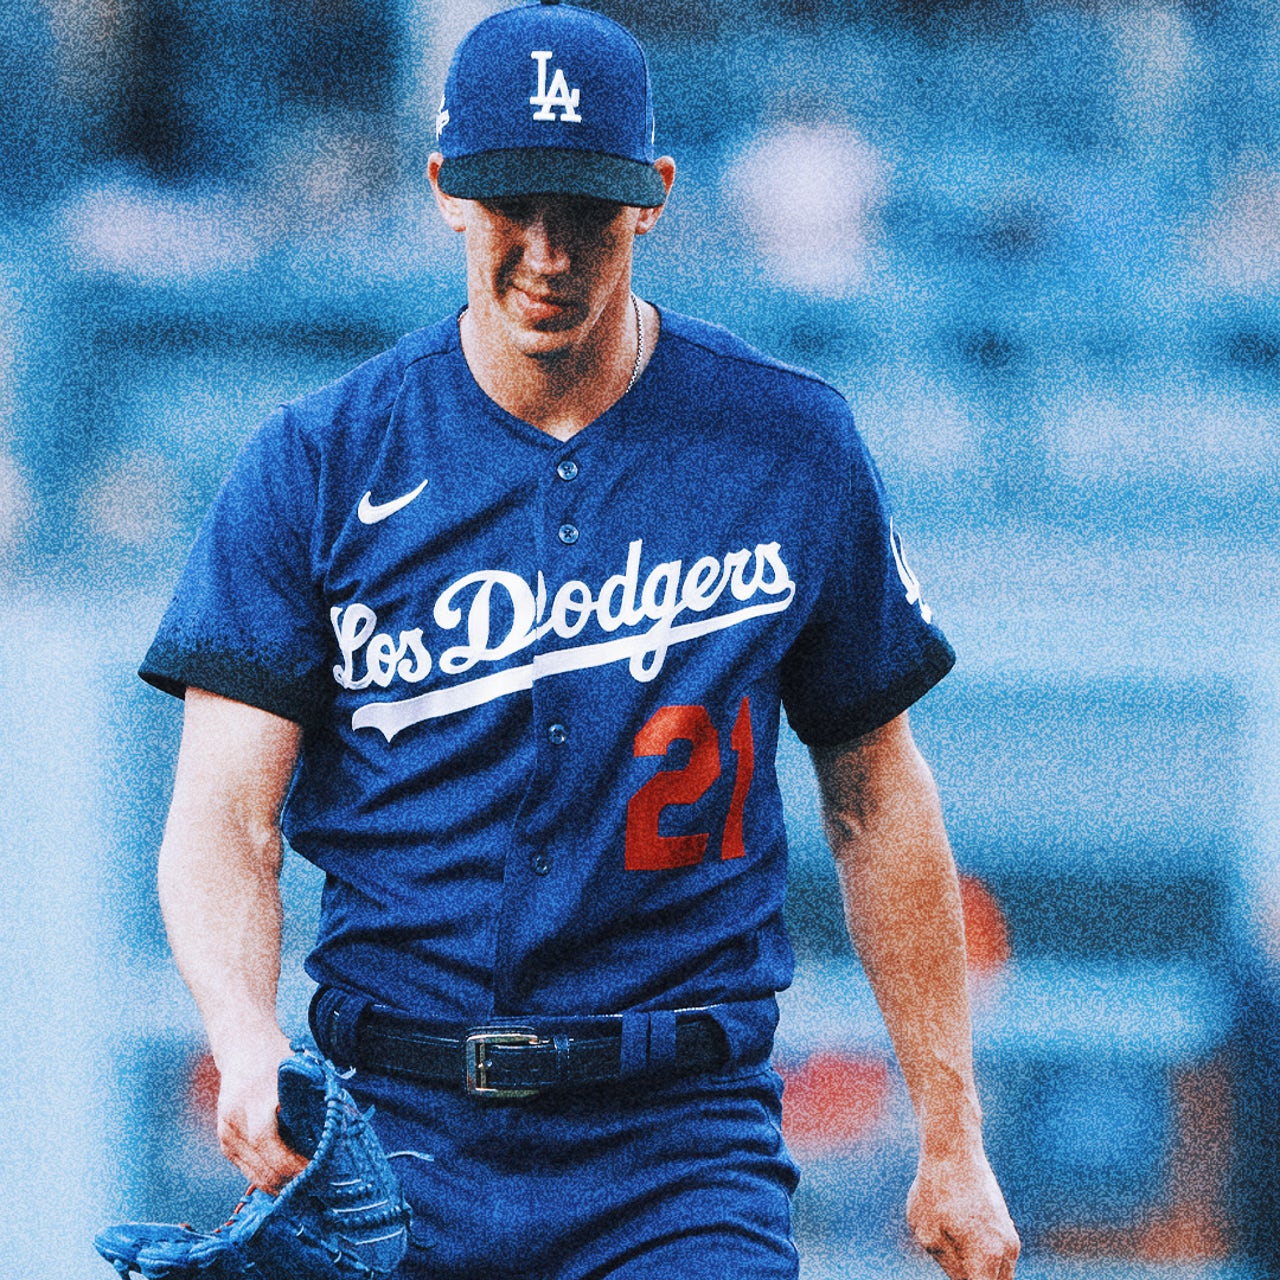 Dodgers pitcher Walker Buehler won't return from Tommy John surgery in 2023